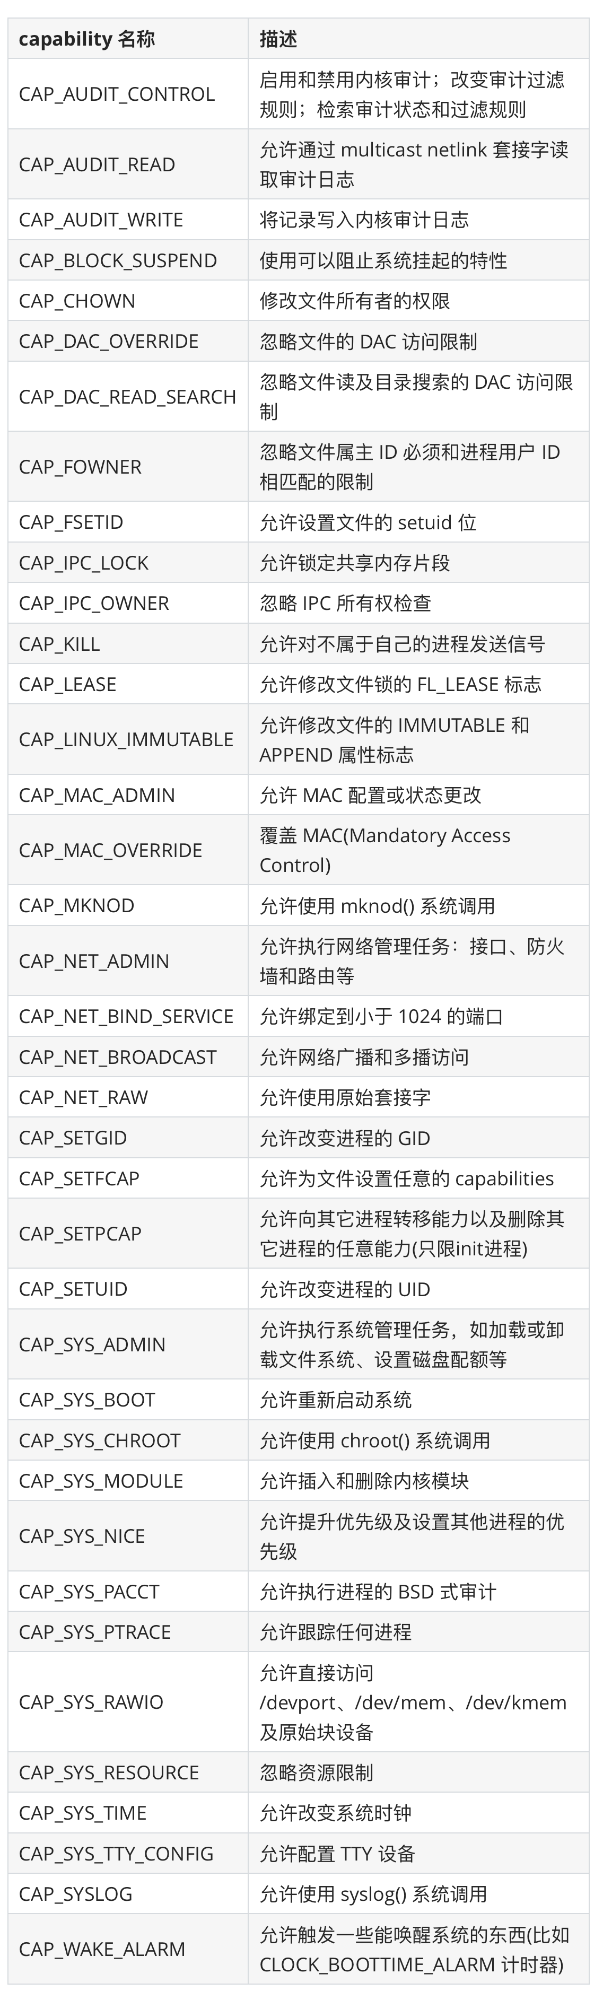 linux capabilities list